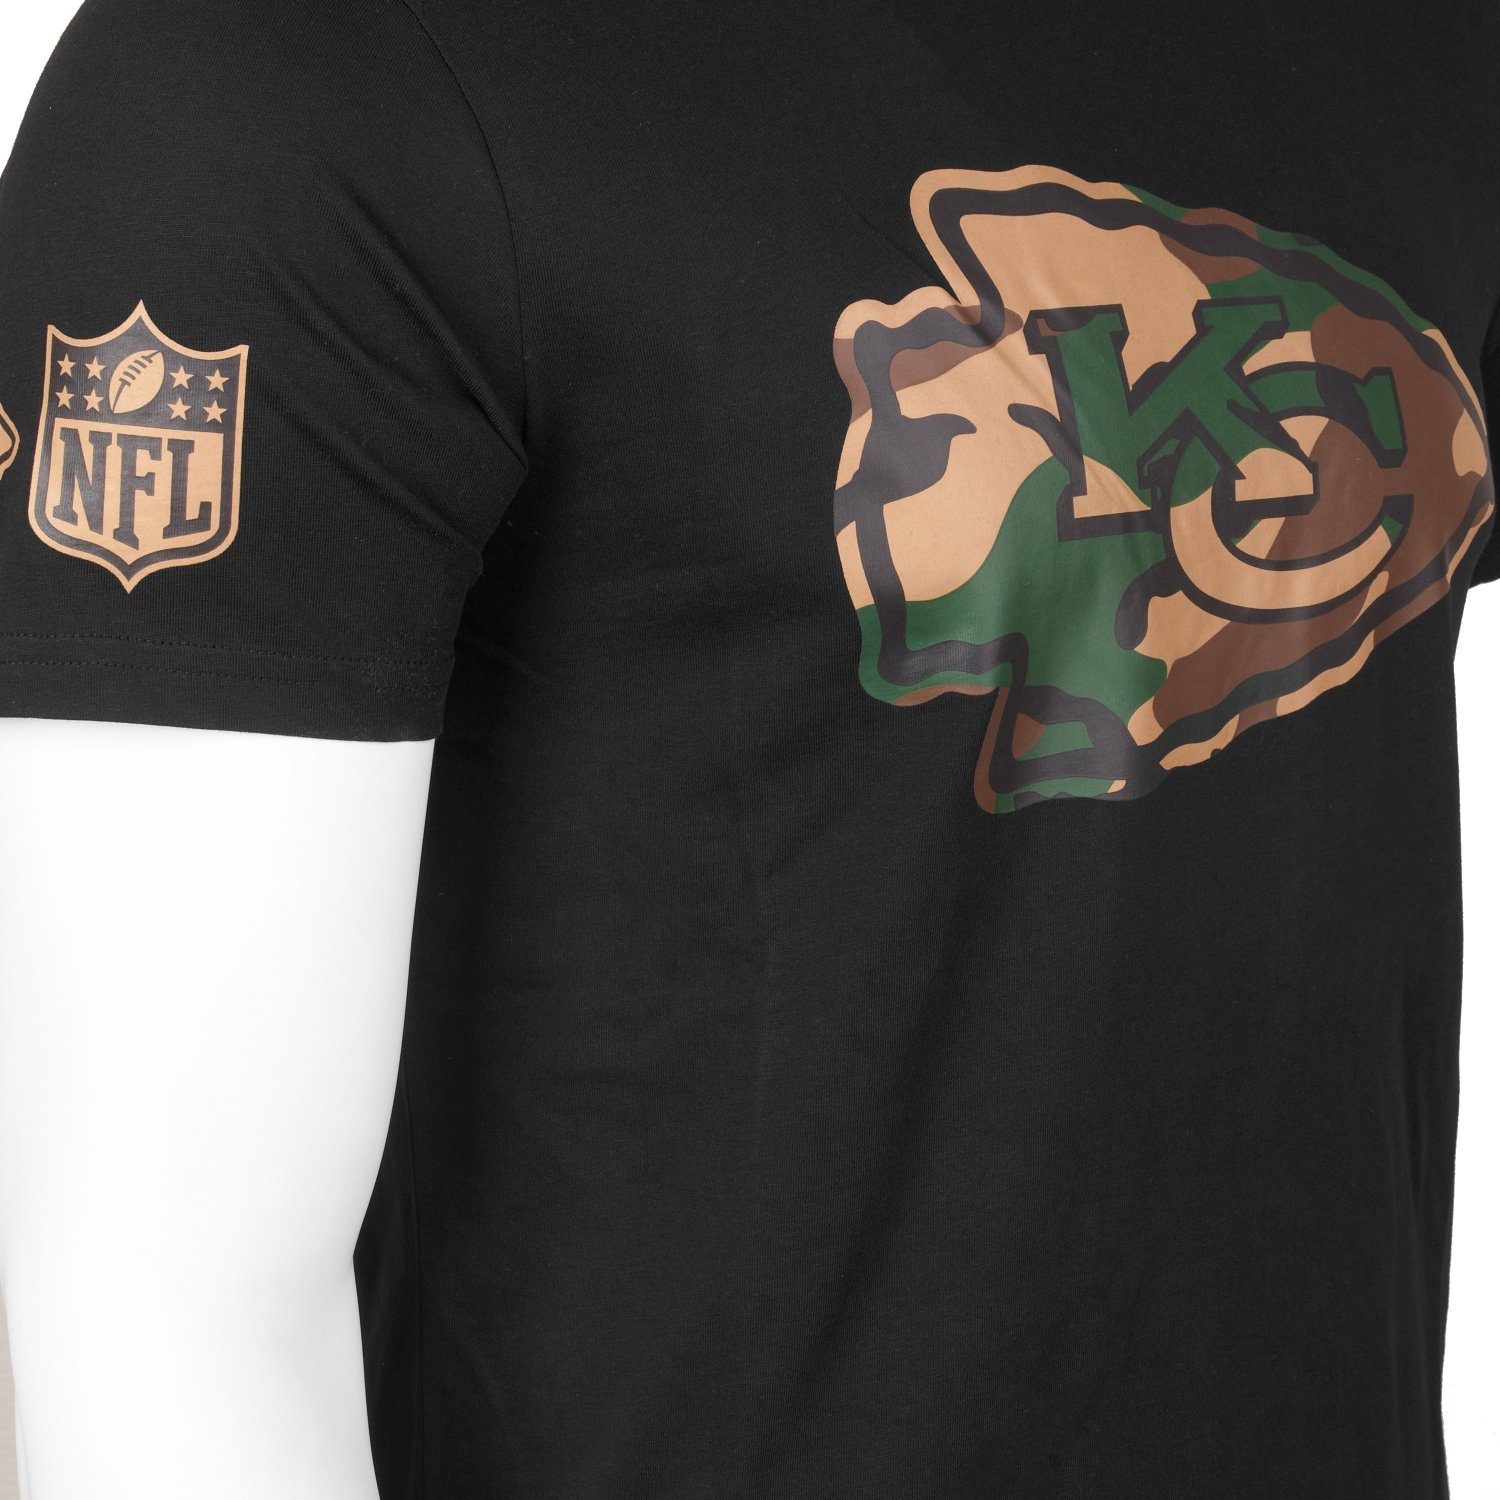 Print-Shirt Era New Teams Football NFL Chiefs City Kansas